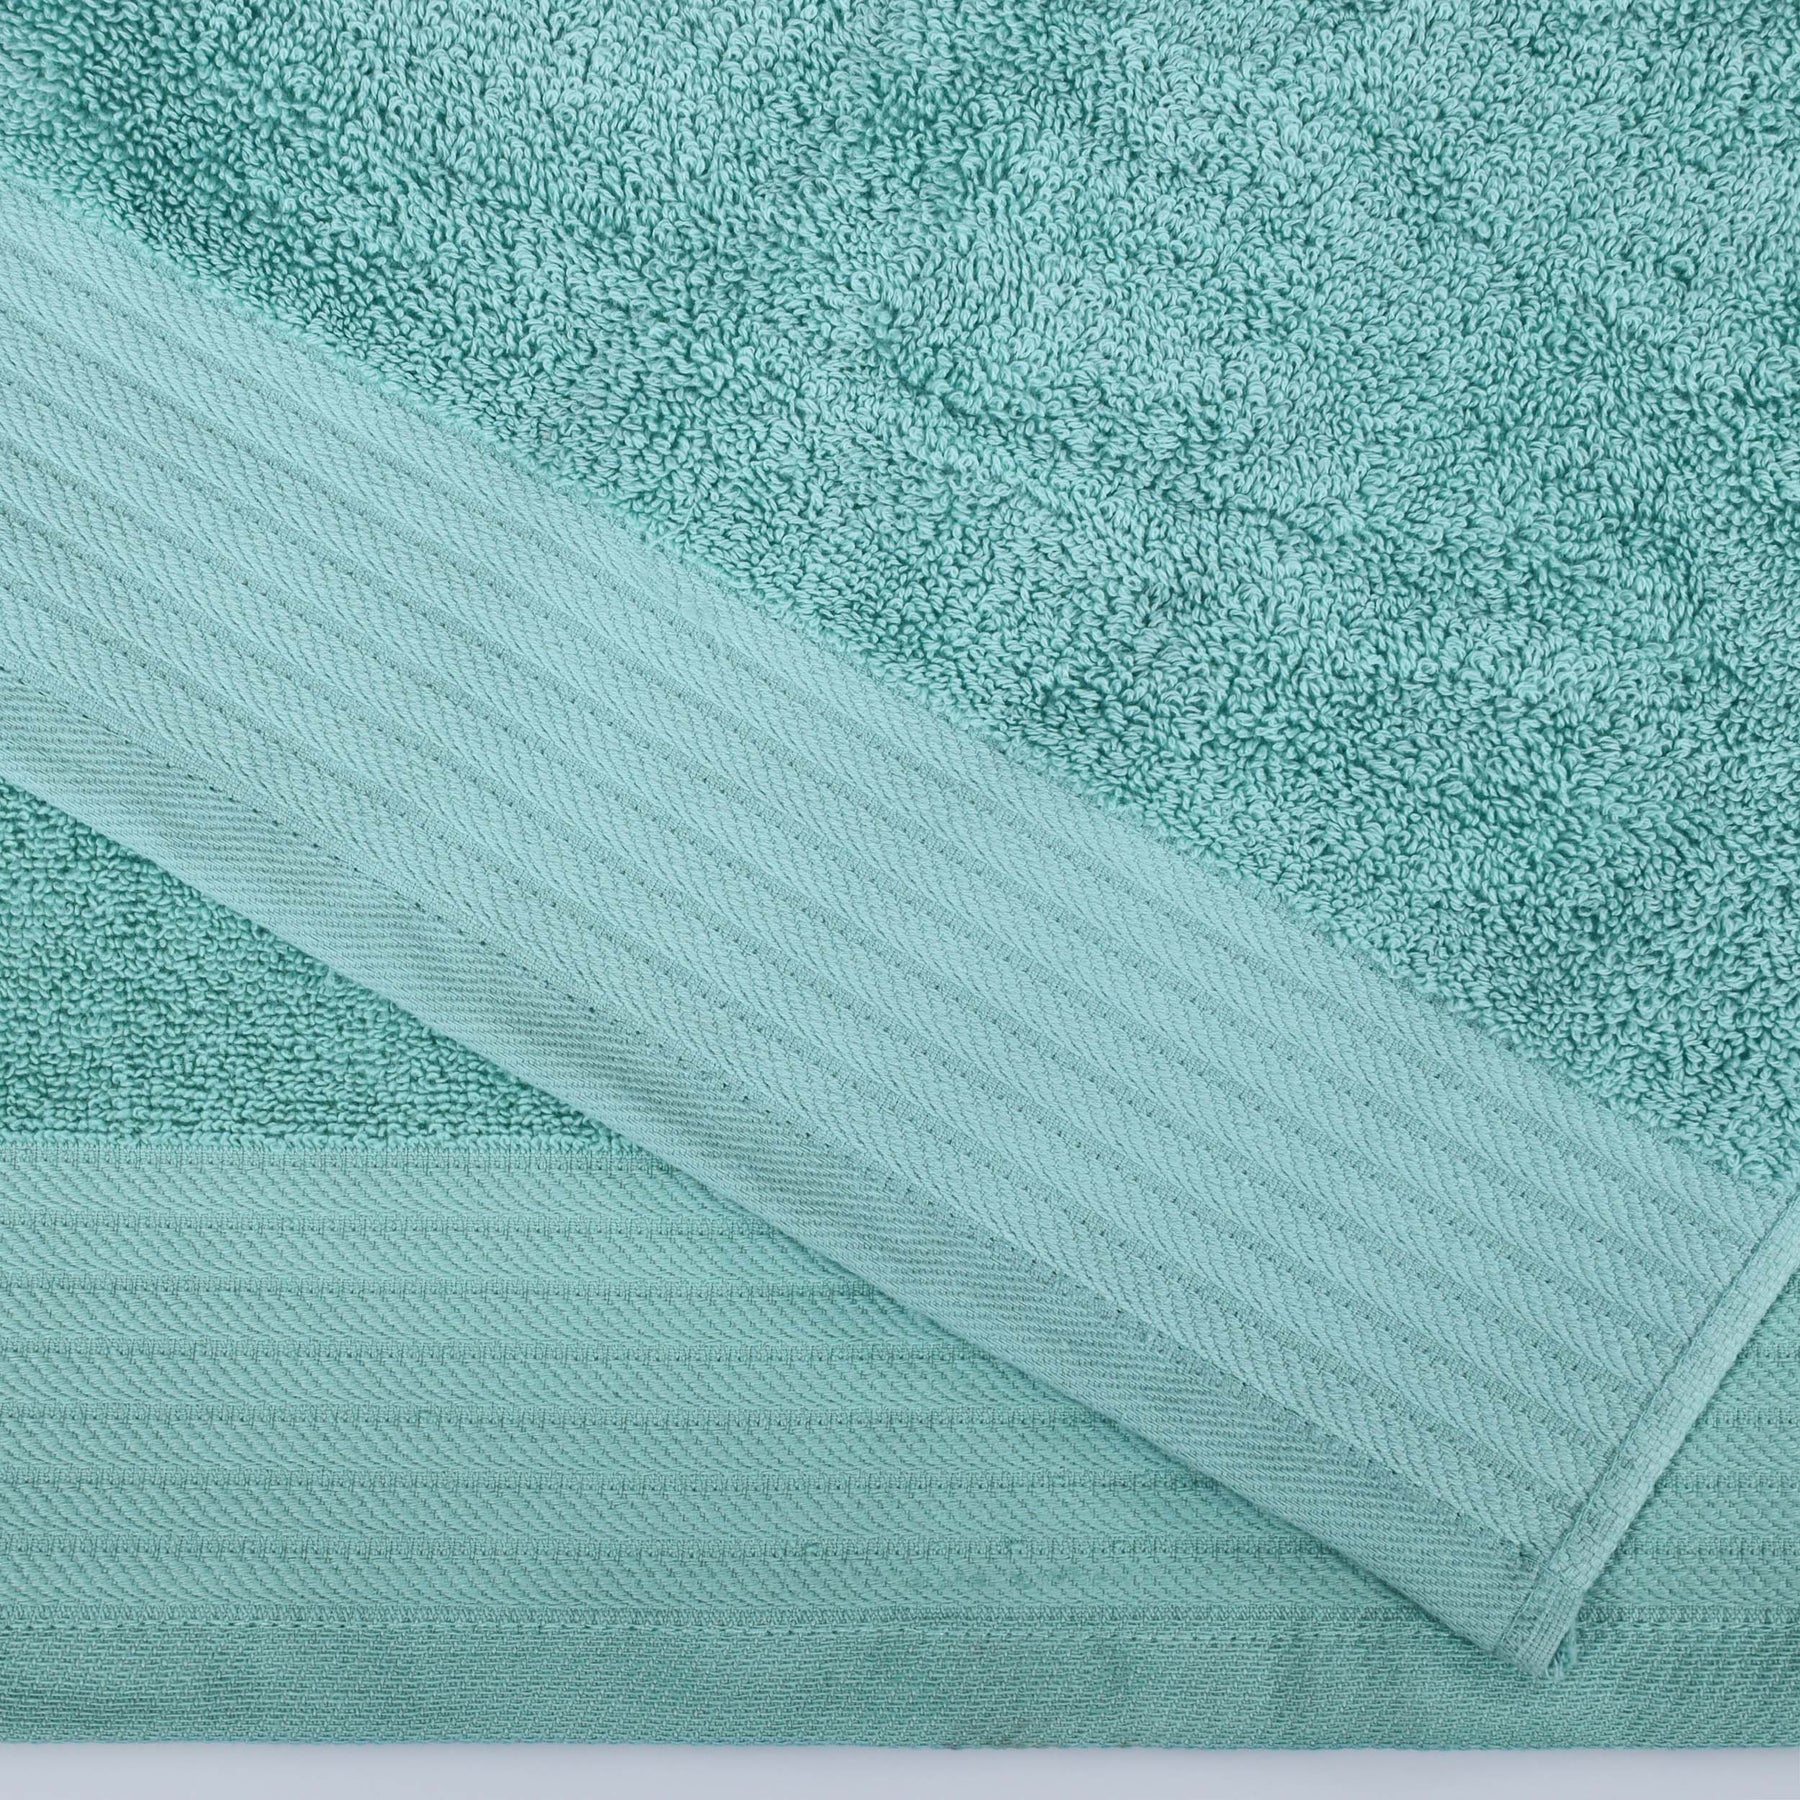 Premium Turkish Cotton Jacquard Herringbone and Solid 4-Piece Bath Towel Set - Cascade